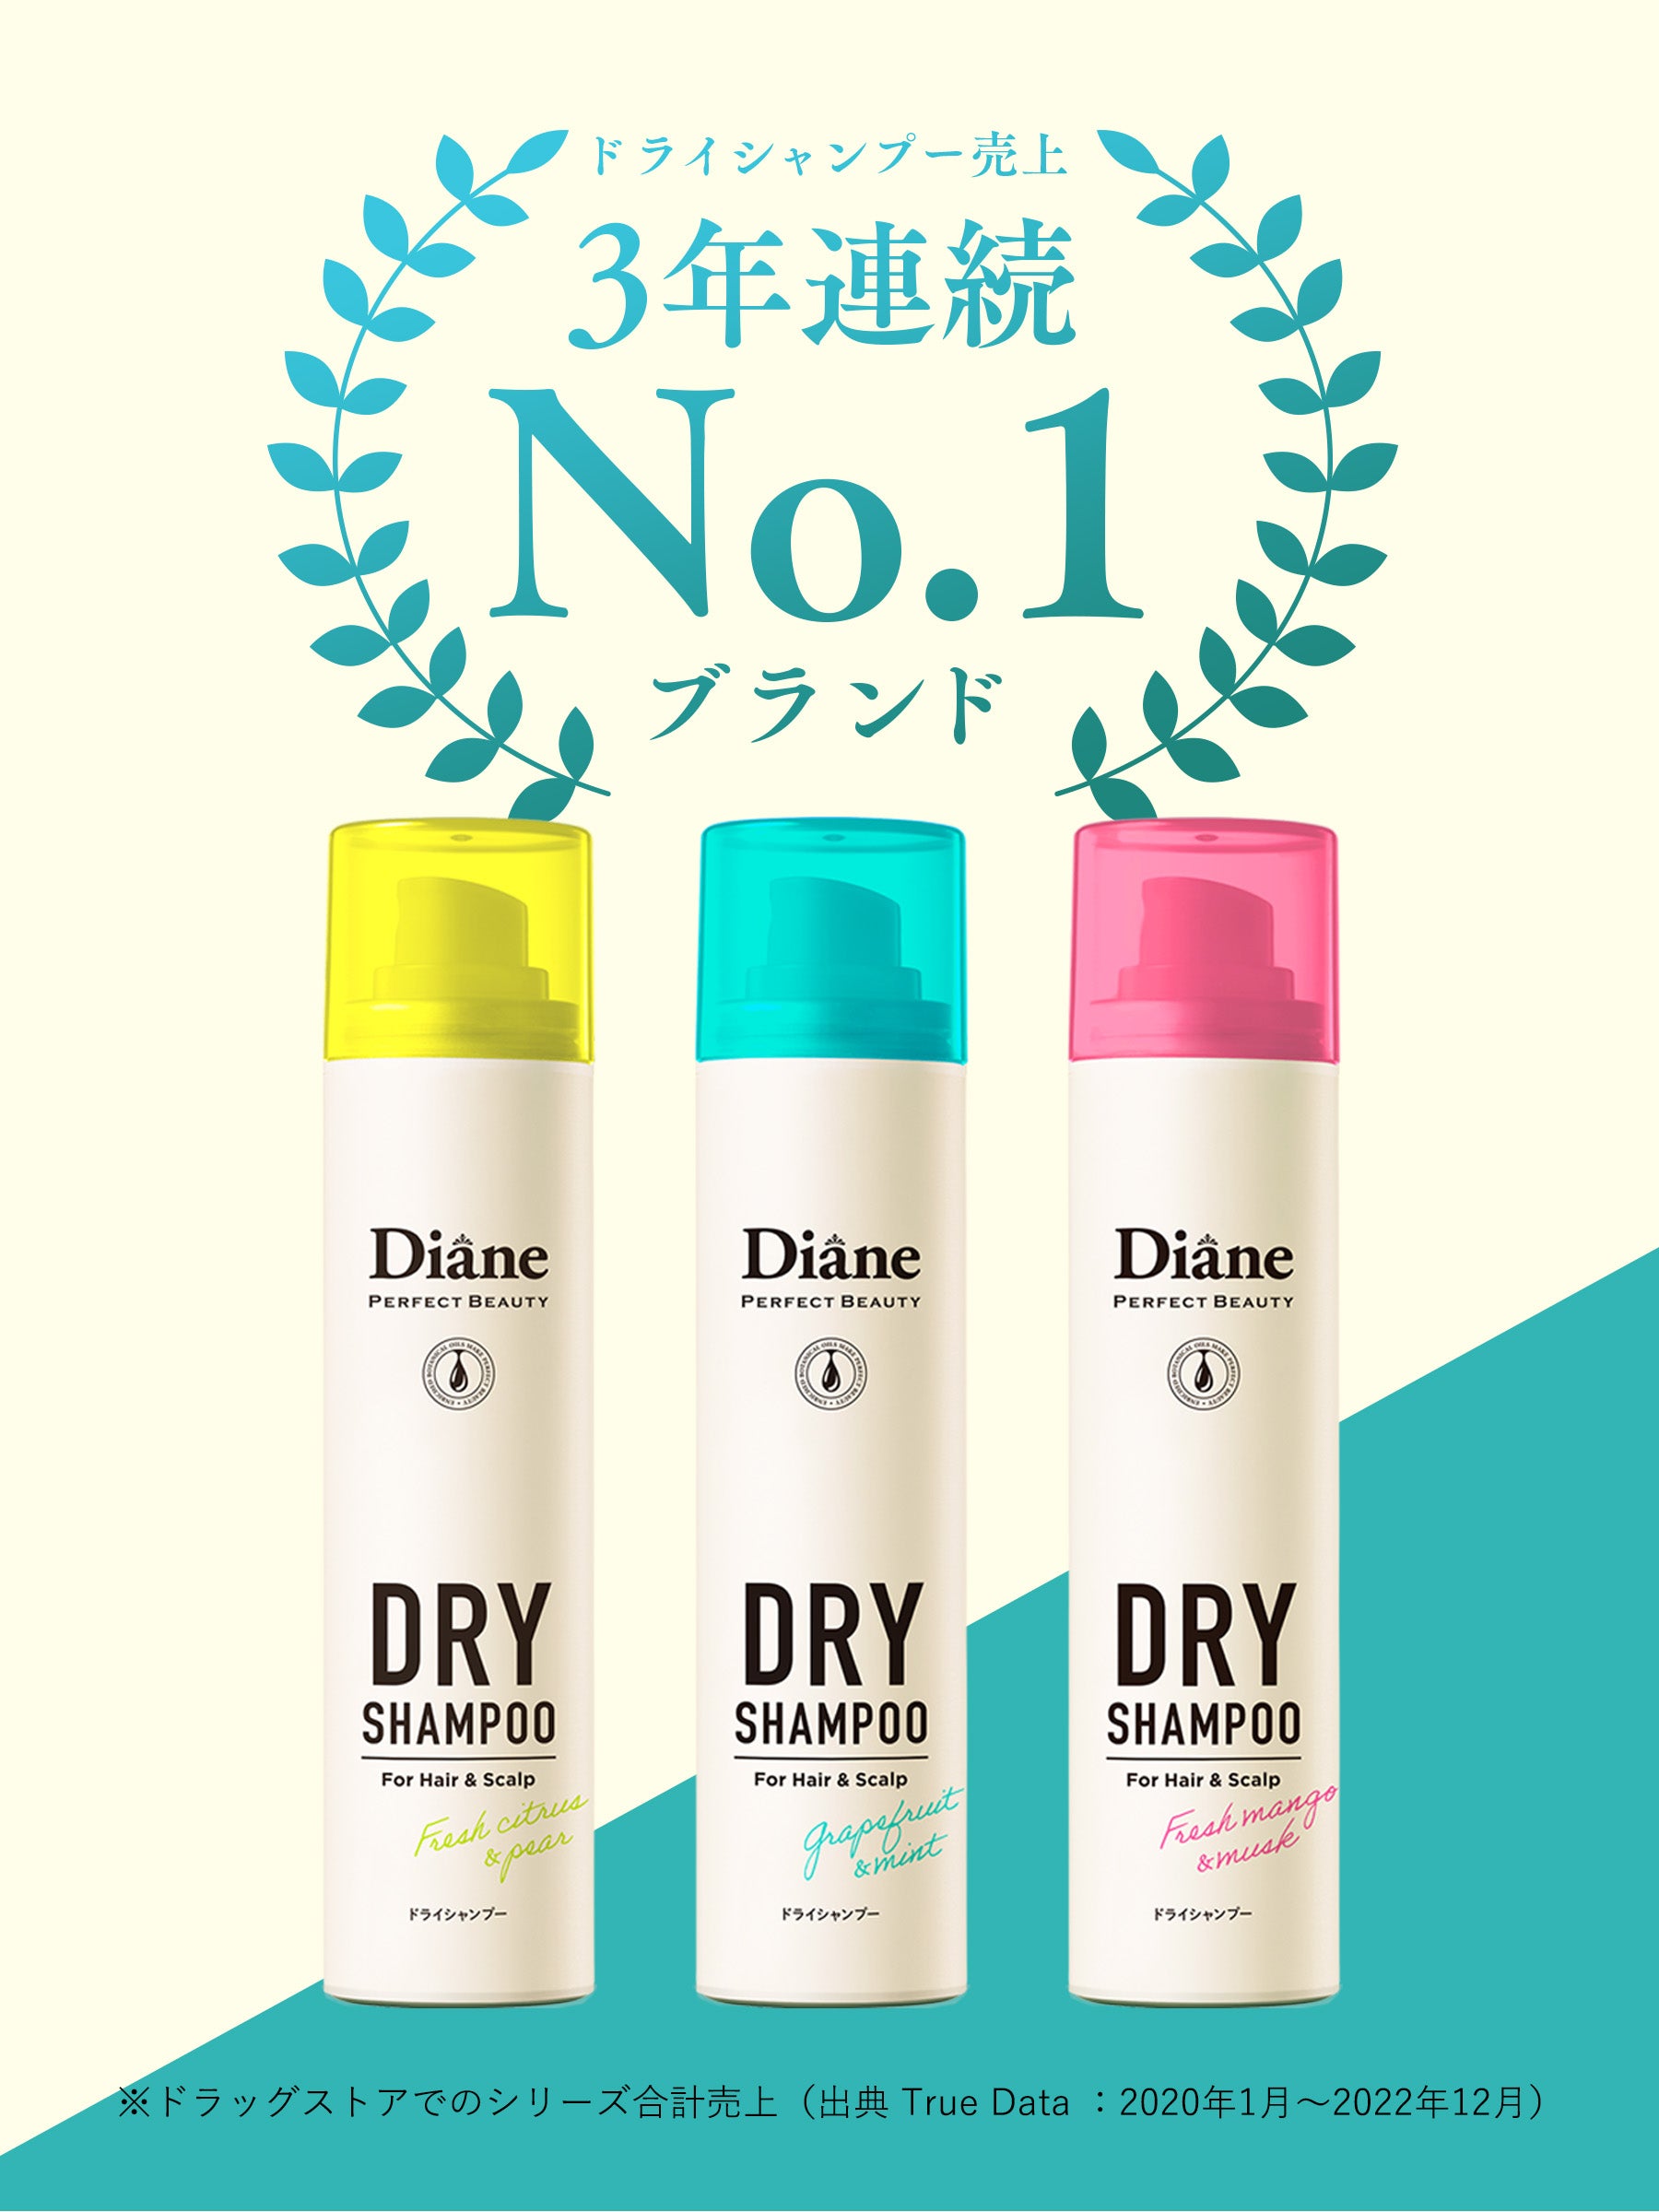 Moist Diane Perfect Beauty Dry Shampoo Fresh Citrus & Pear Beauty Moist Diane   